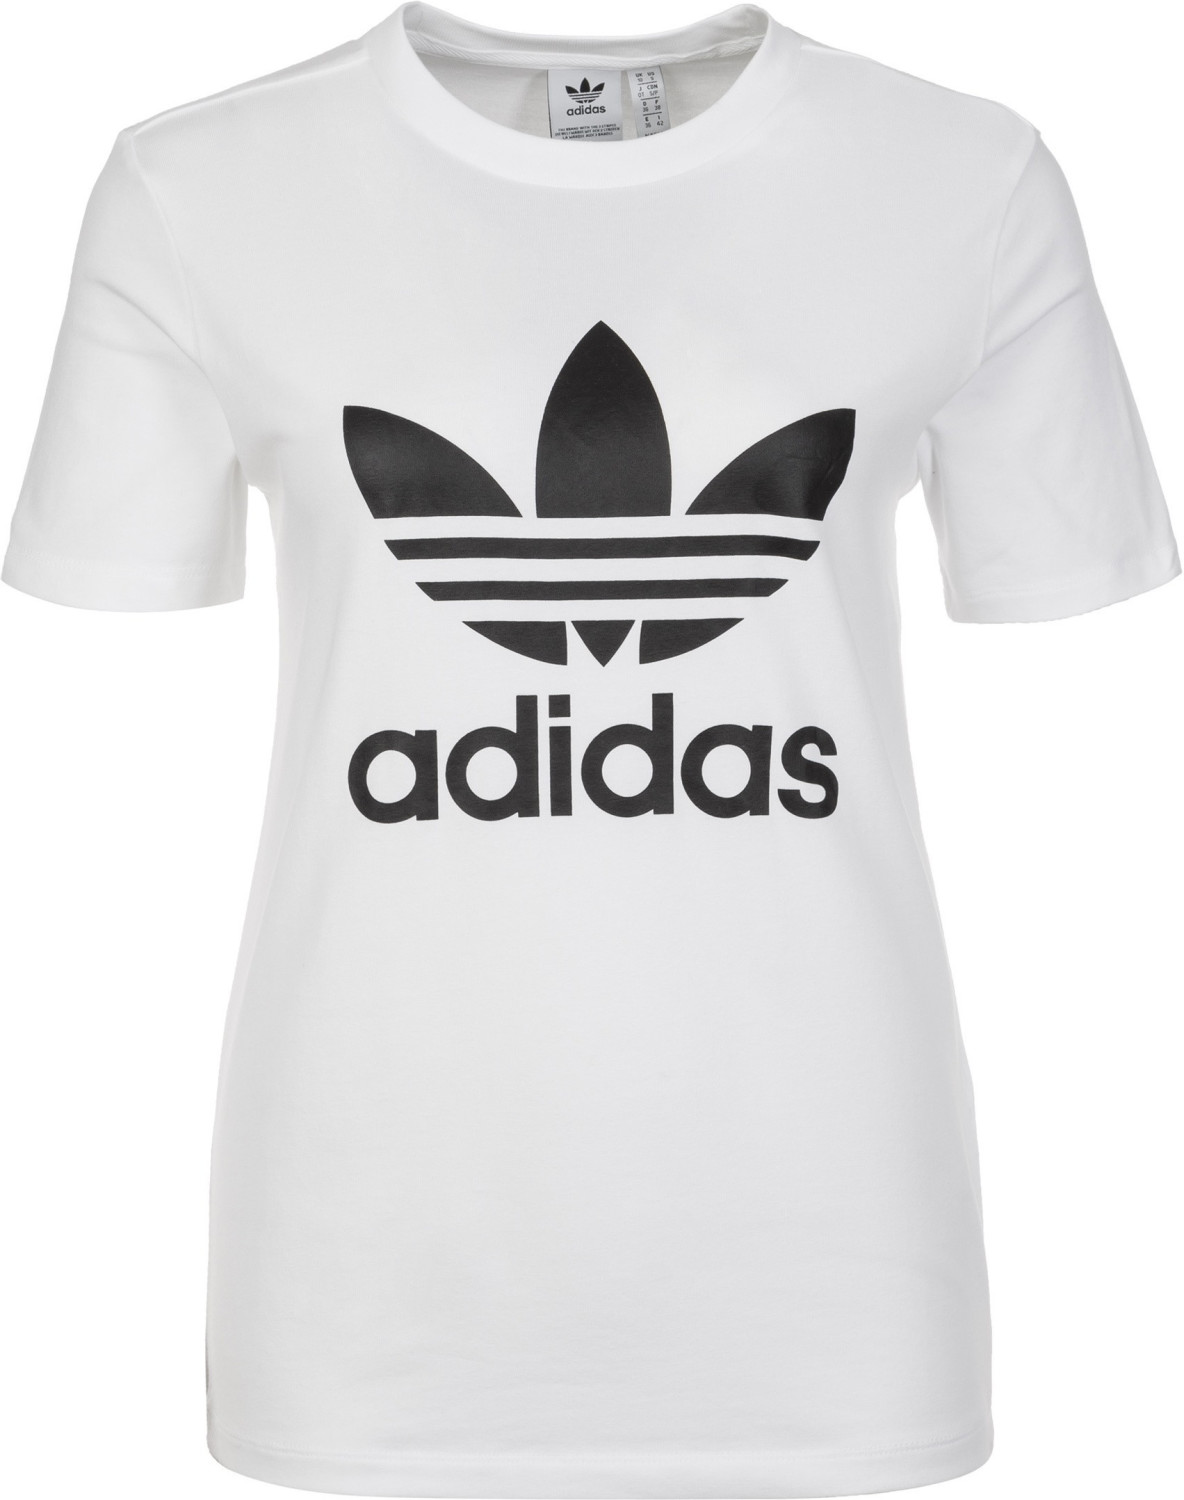 Adidas Originals Trefoil T-Shirt Damen white/black